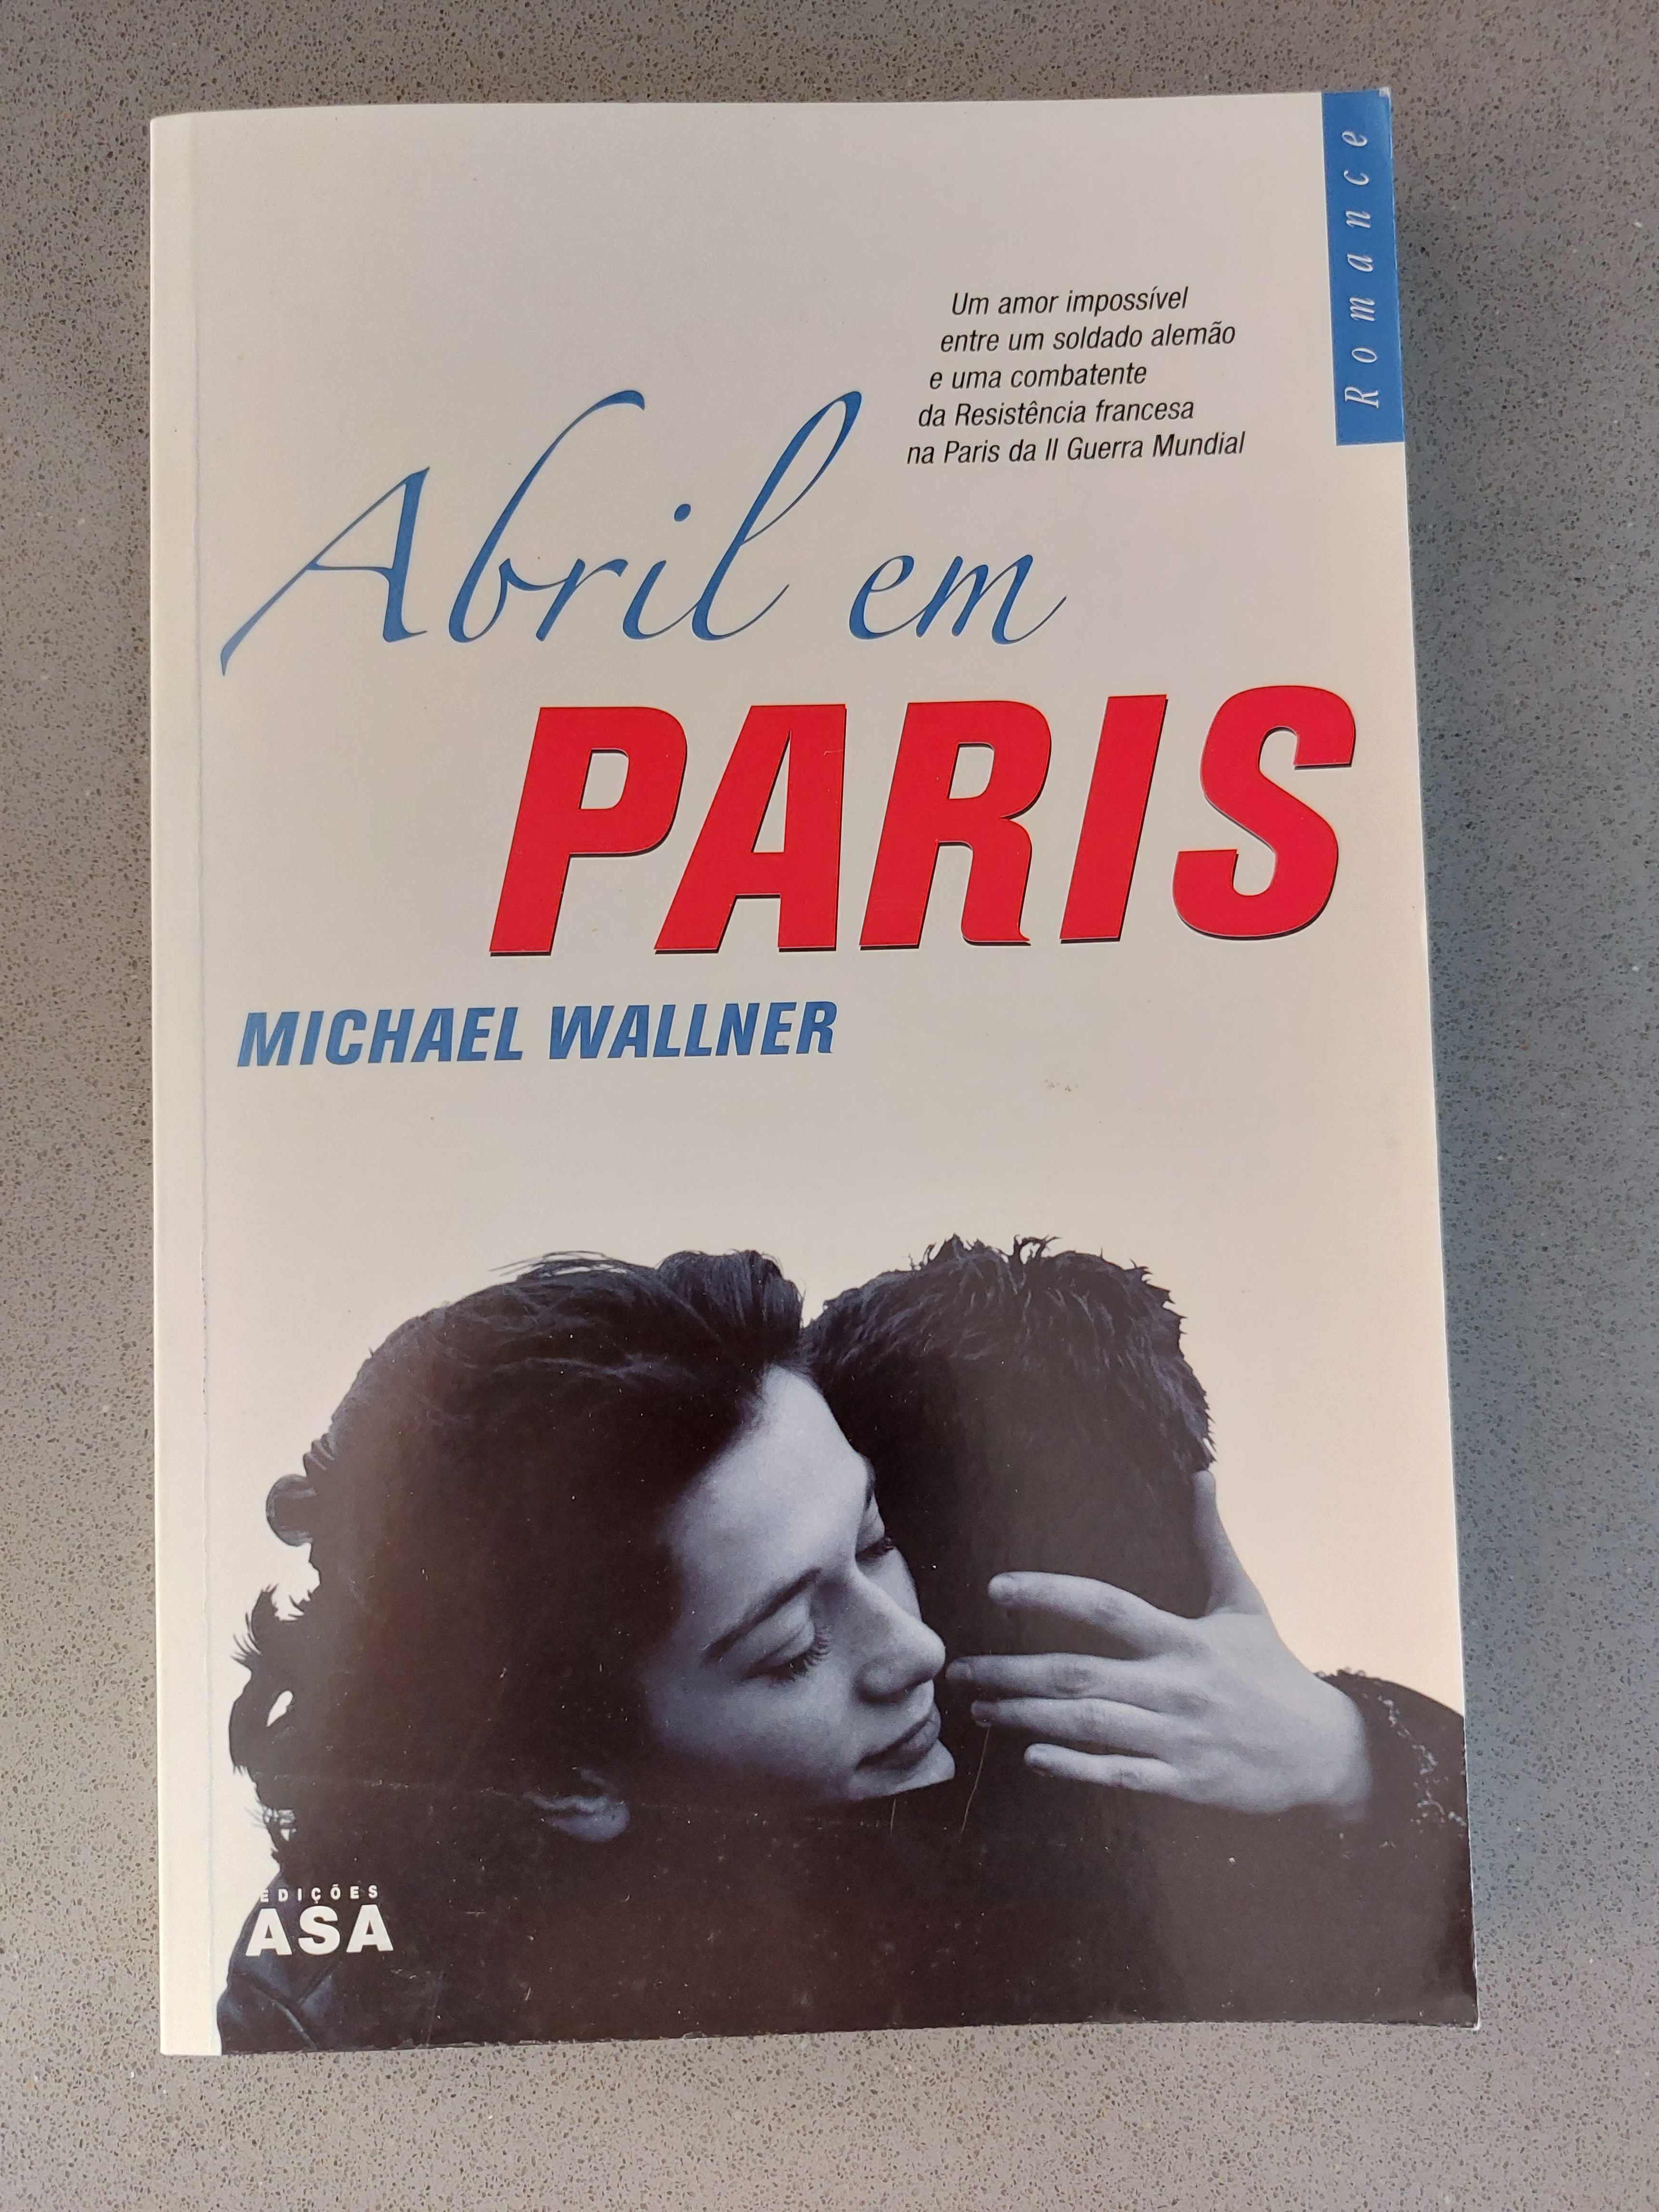 Michael Wallner - Abril em Paris (PORTES GRATIS)